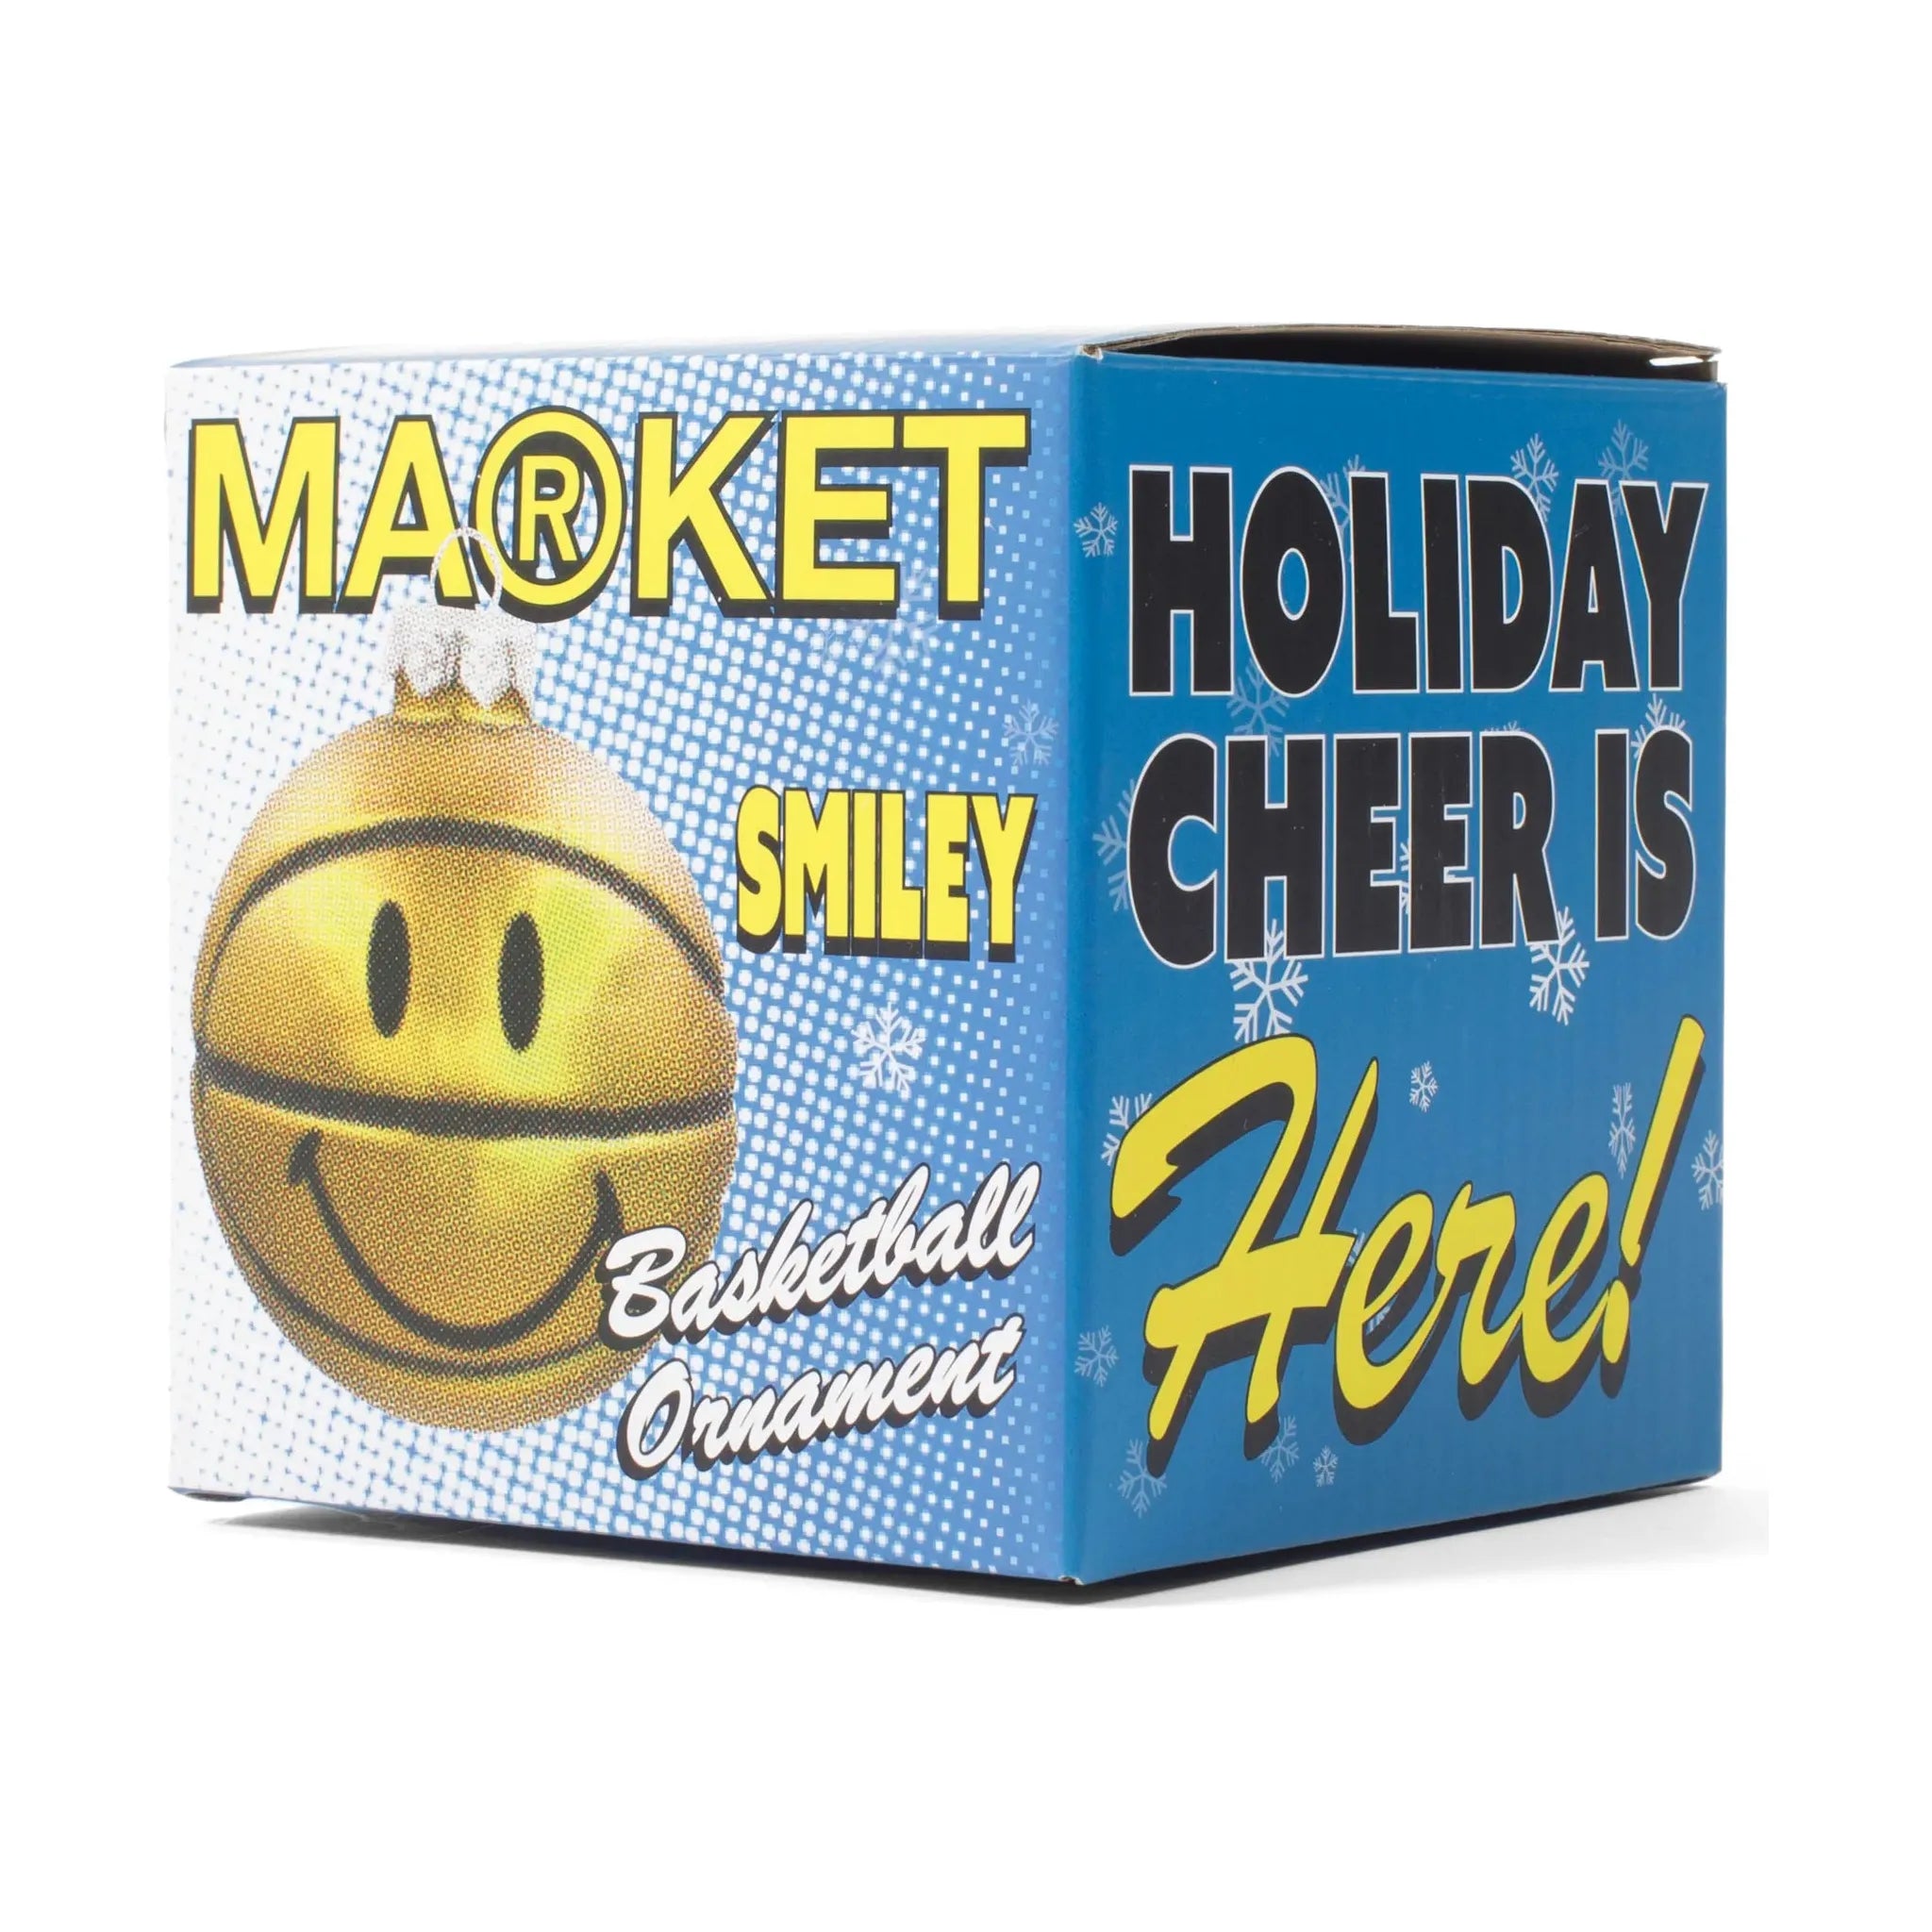 Market Smiley Basketball Ornament